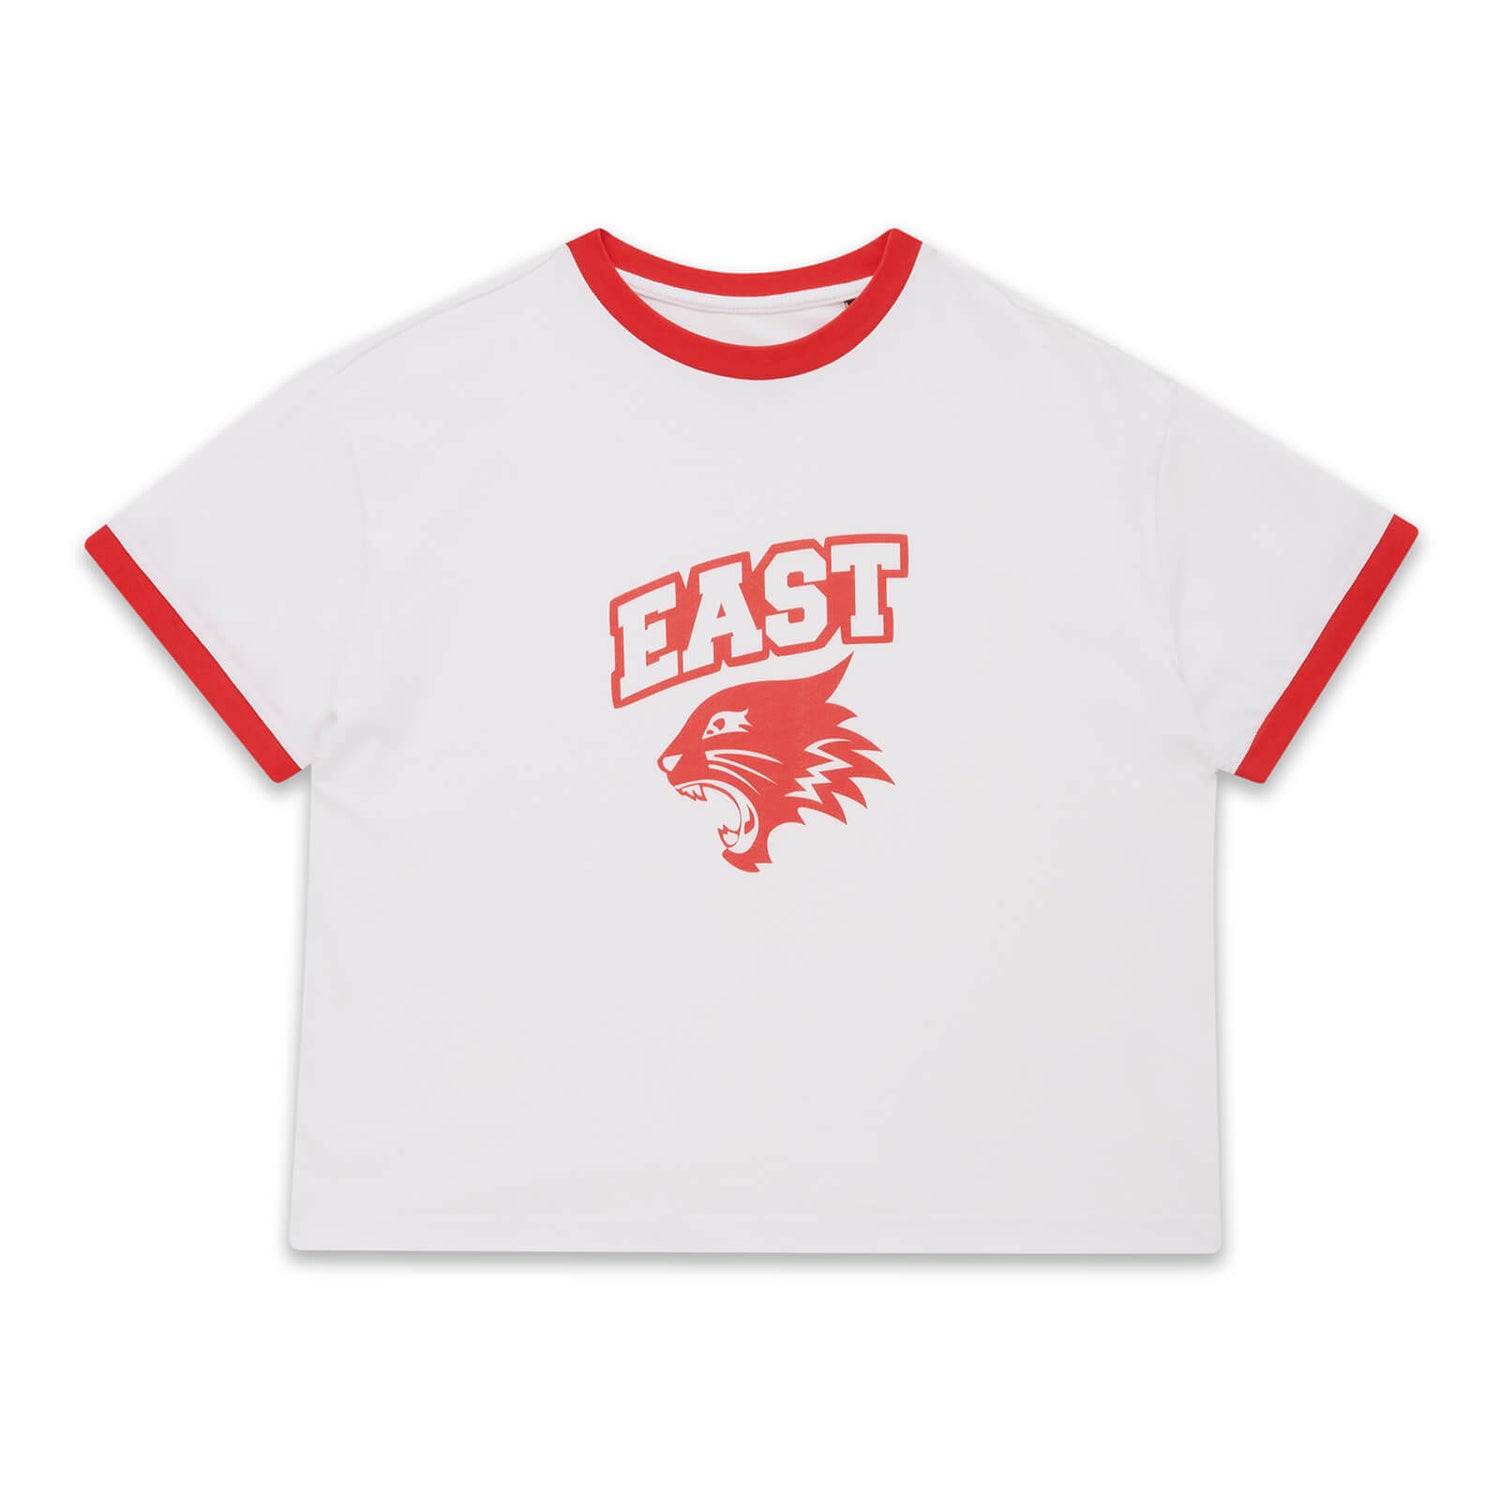 High School Musical East Women's Cropped Ringer T-Shirt - White Red